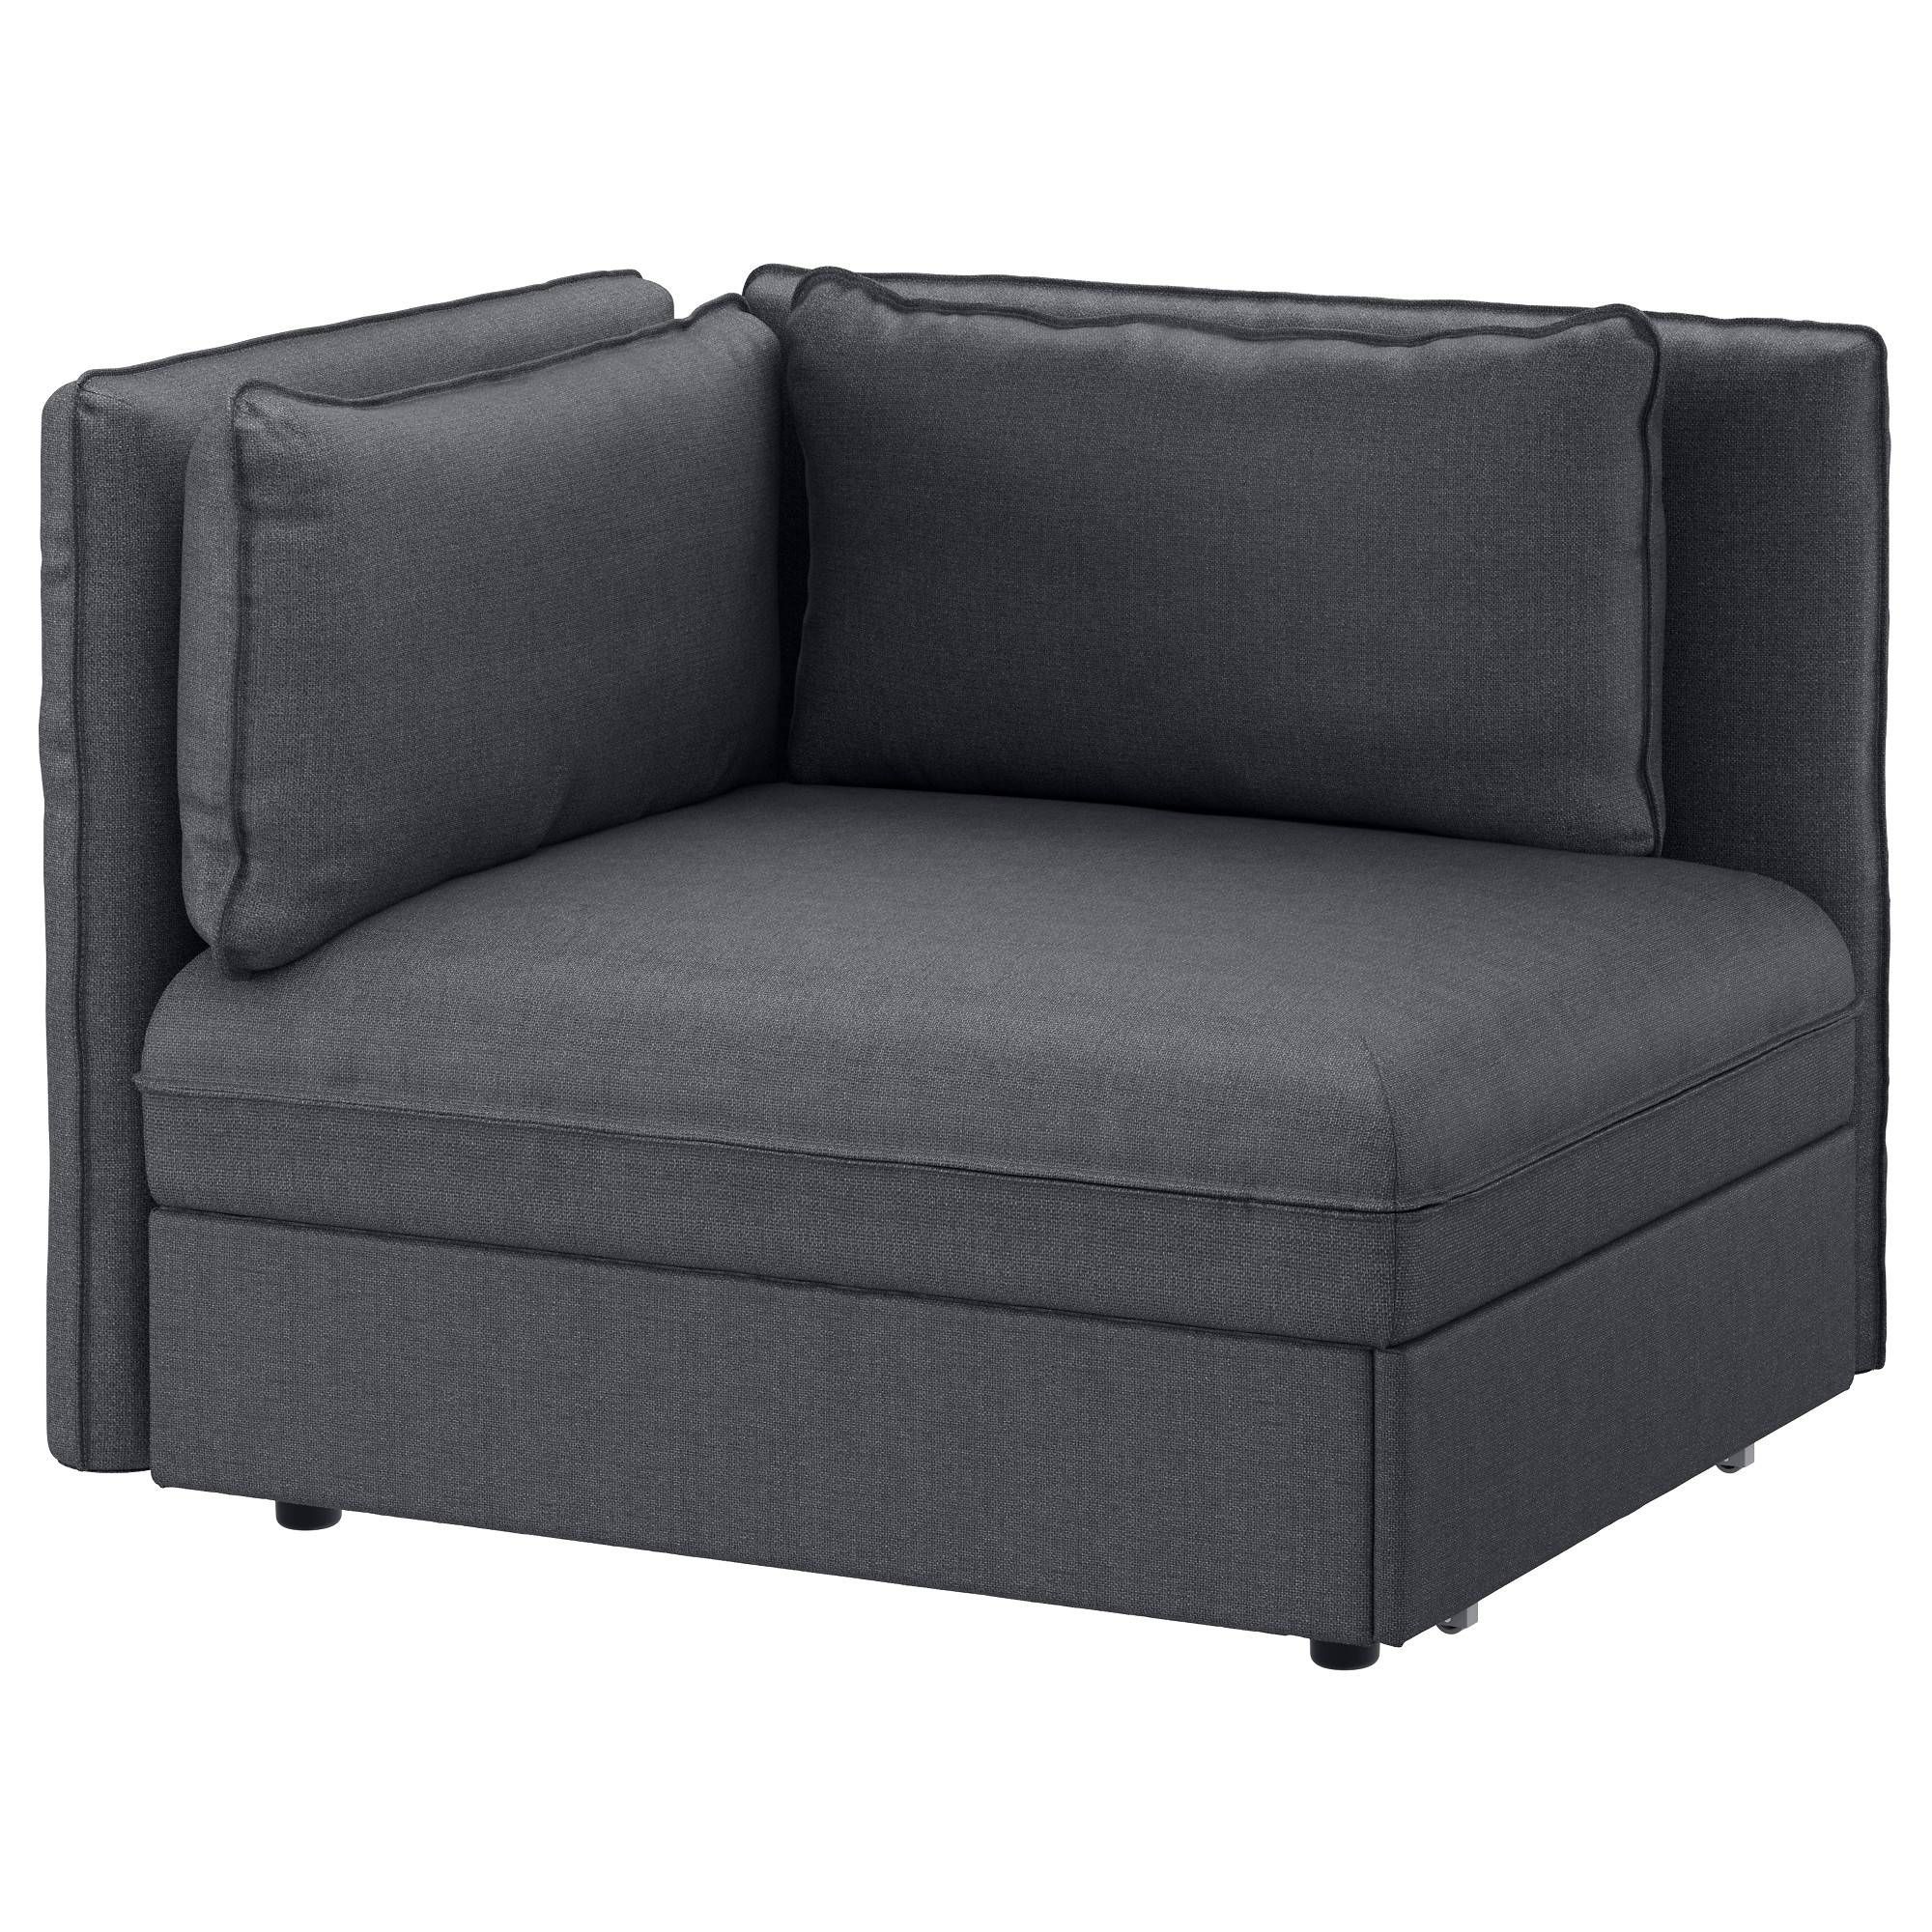 Sleeper Sofas & Chair Beds – Ikea Inside Single Seat Sofa Chairs (View 15 of 15)